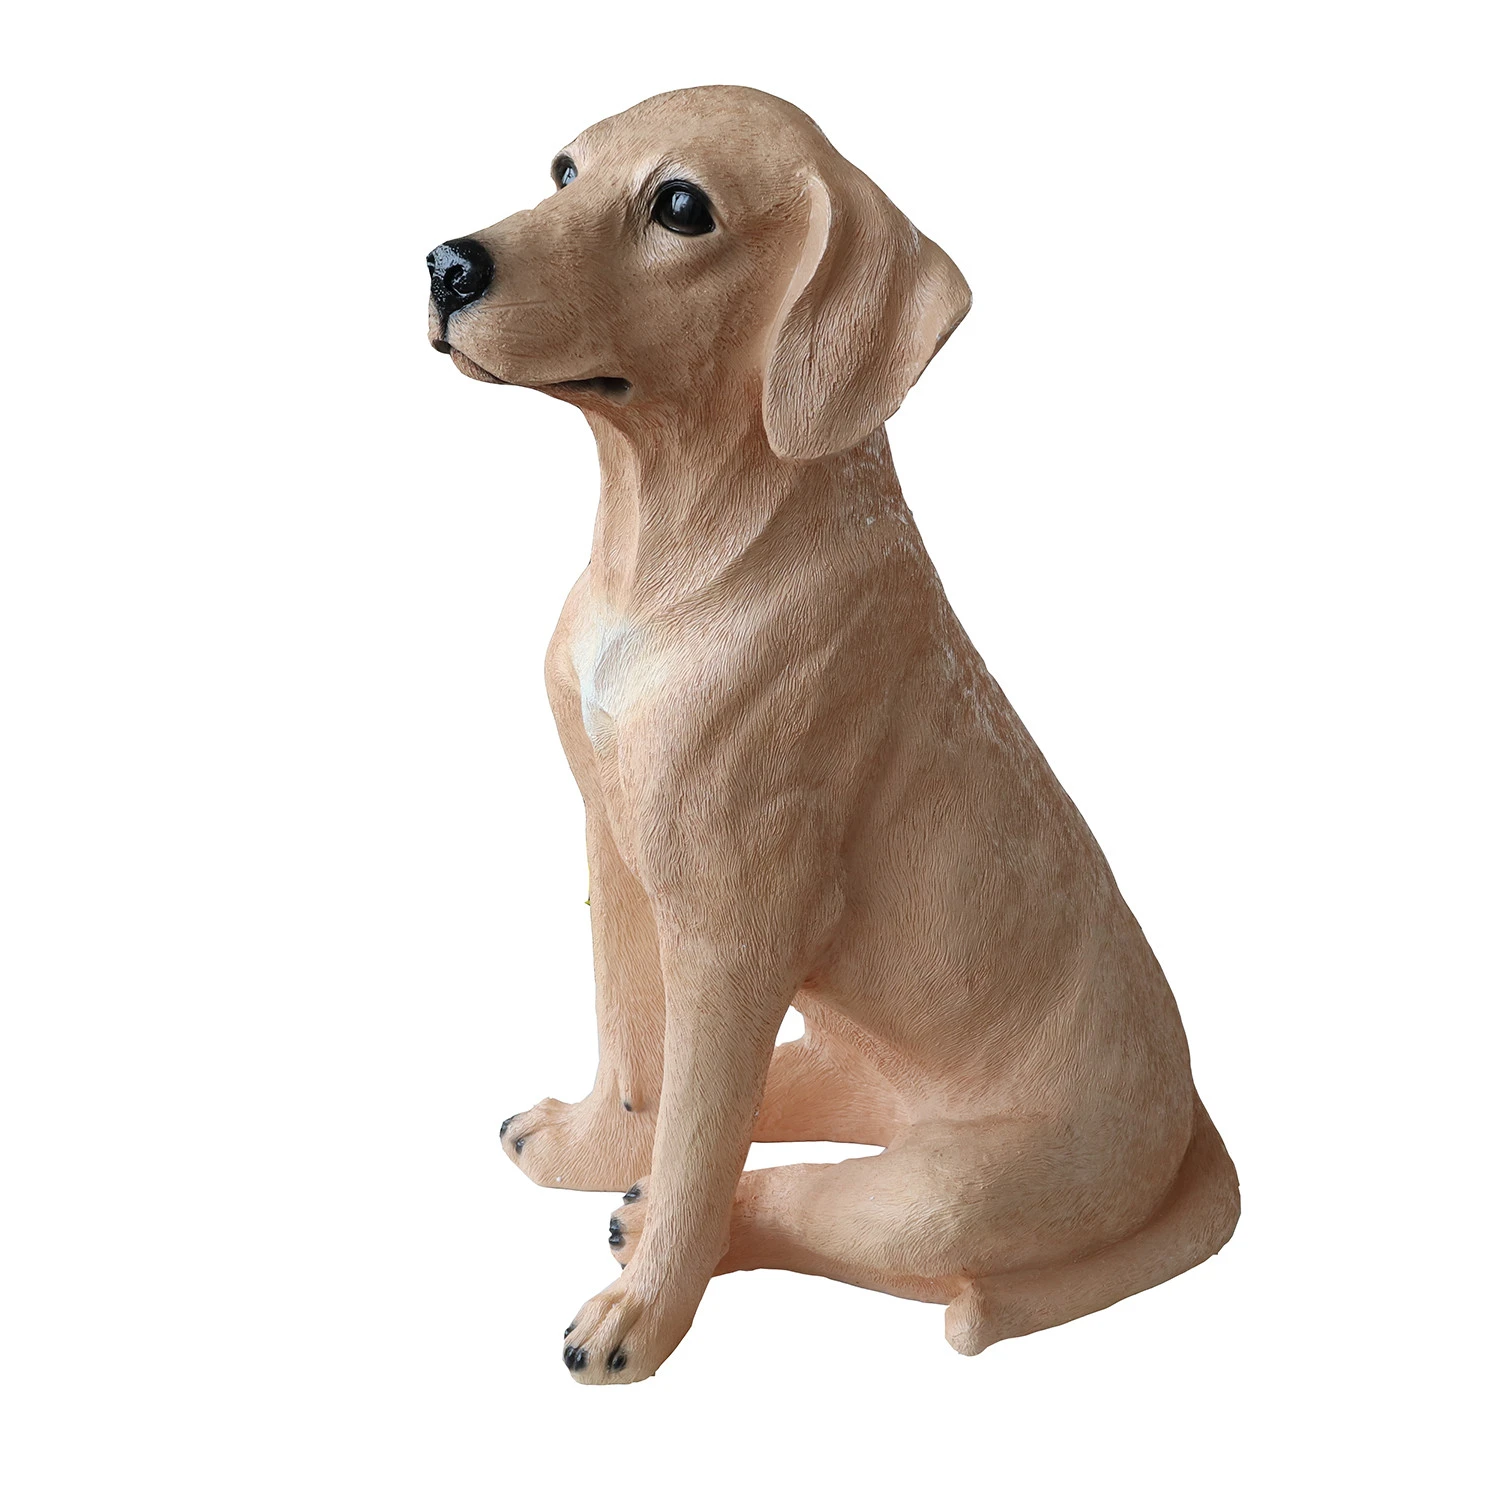 Resin made model craft dog